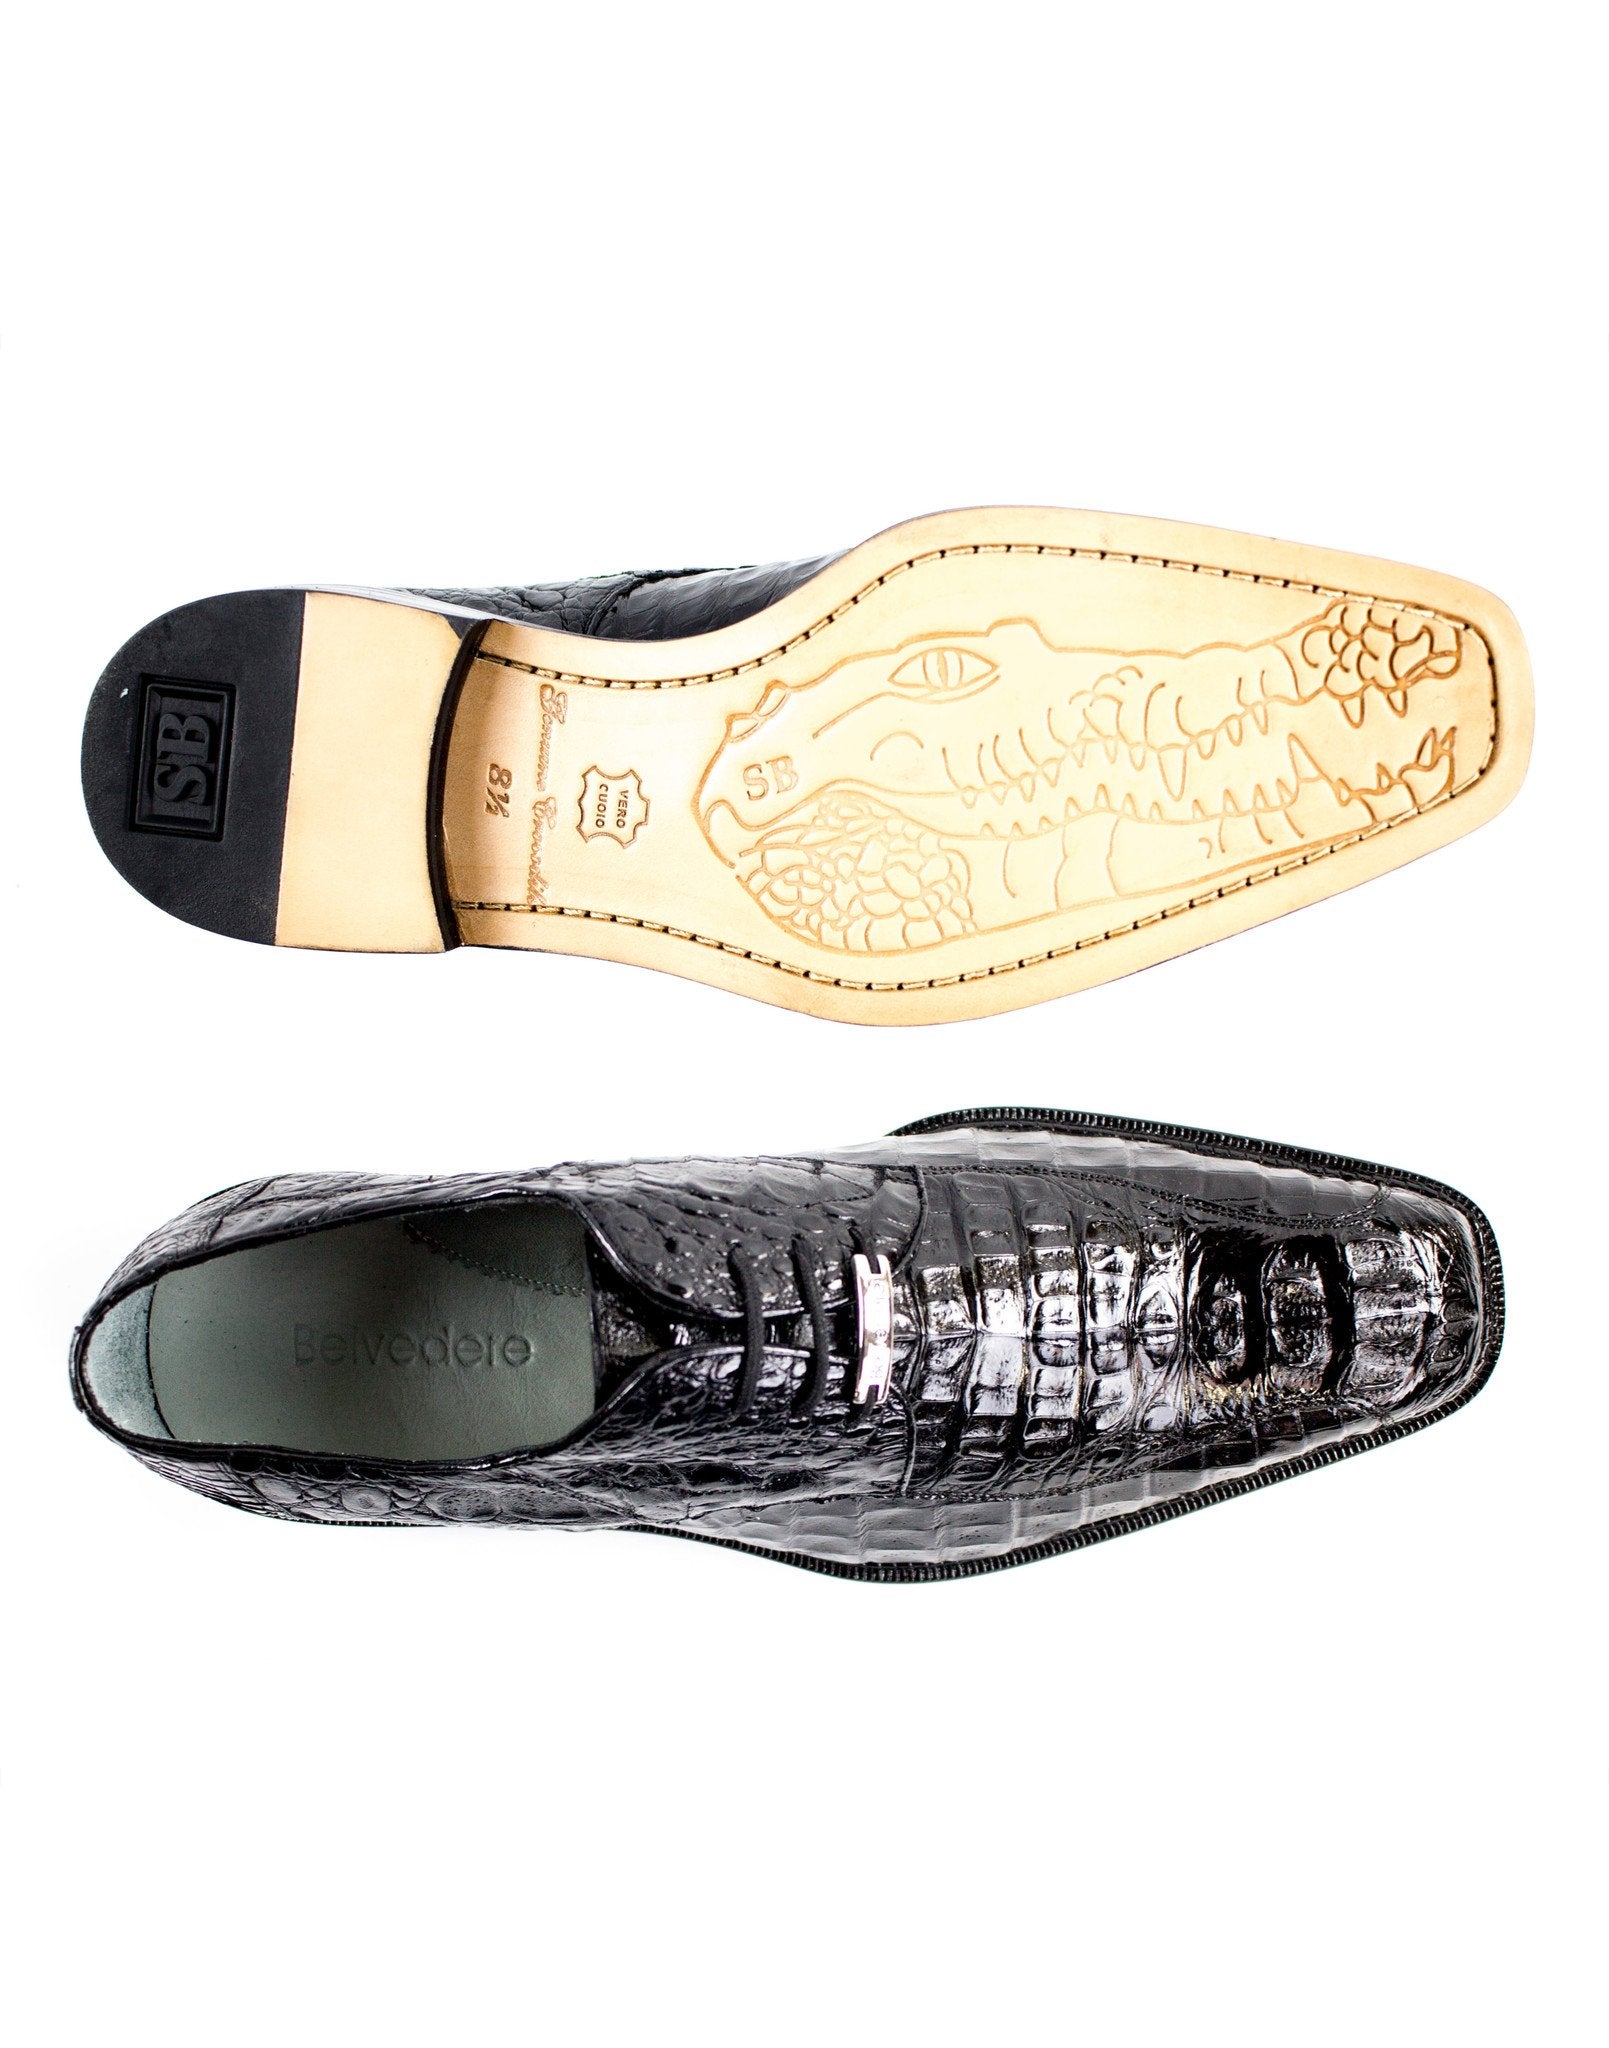 Belvedere - Chapo, Genuine Hornback Crocodile Dress Shoe - Black - 1465